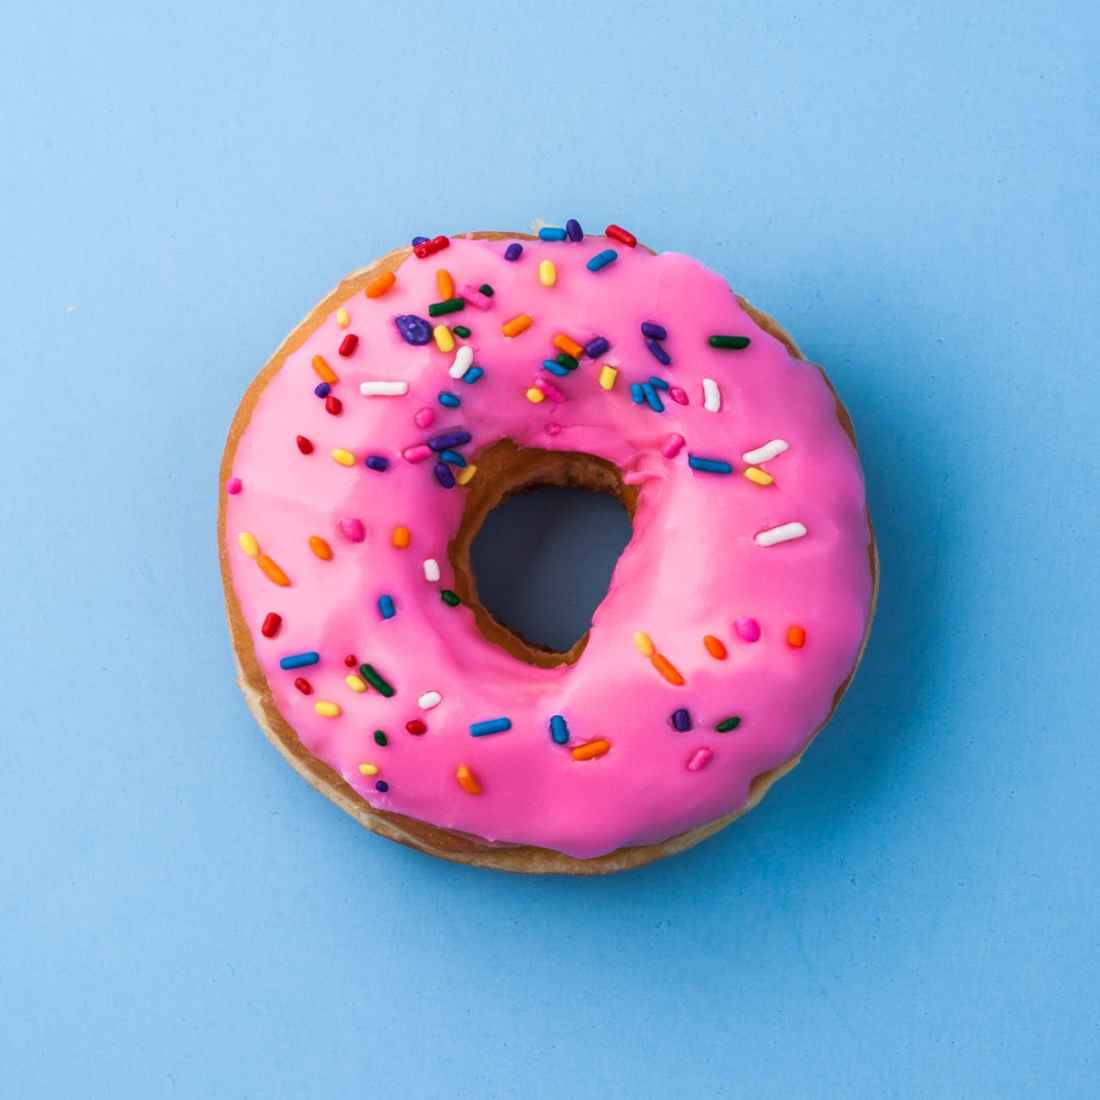 photography of pink doughnut